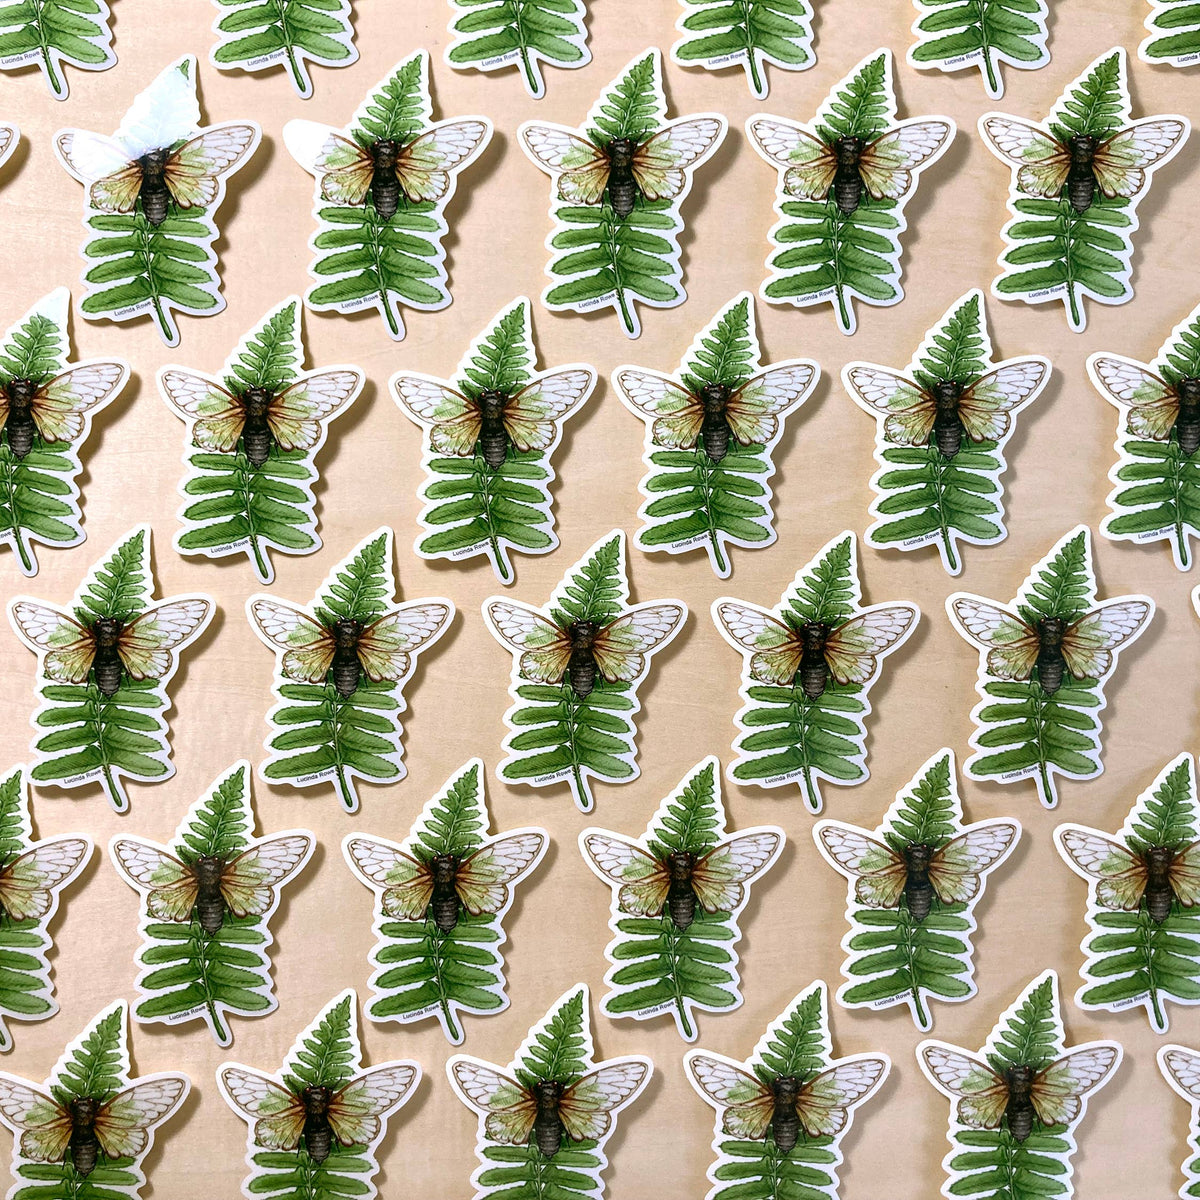 Cicada on Fern - Vinyl Sticker